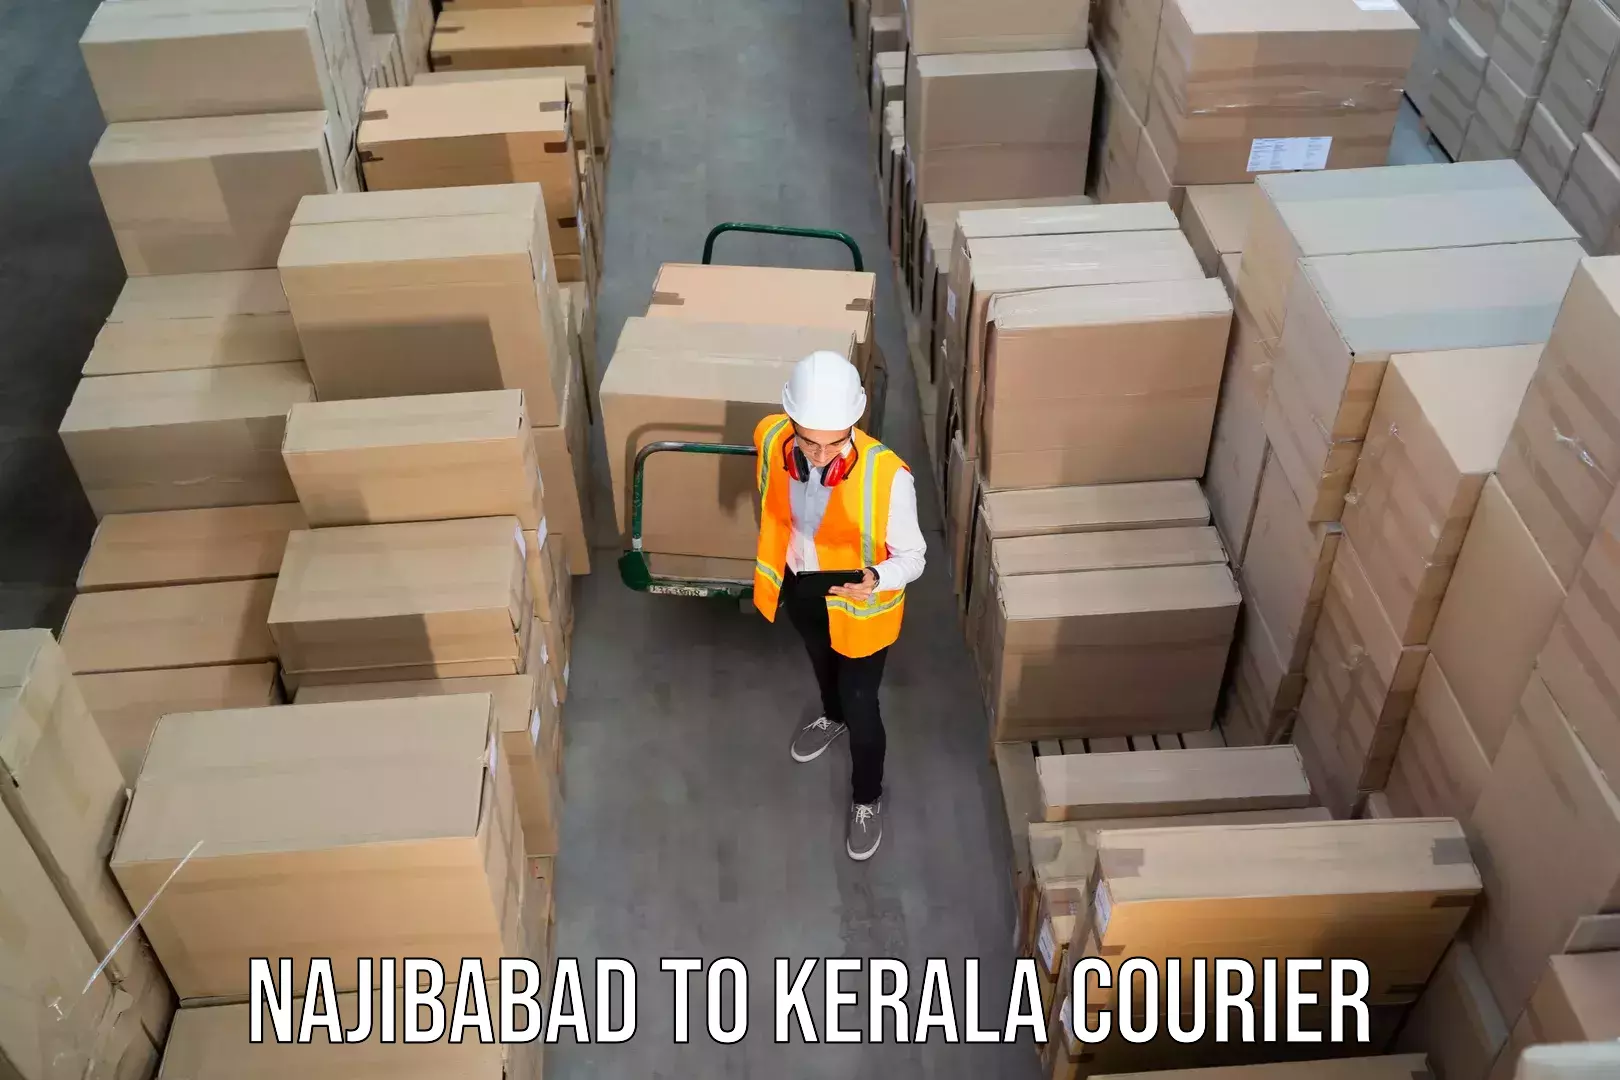 Doorstep delivery service Najibabad to Kozhikode